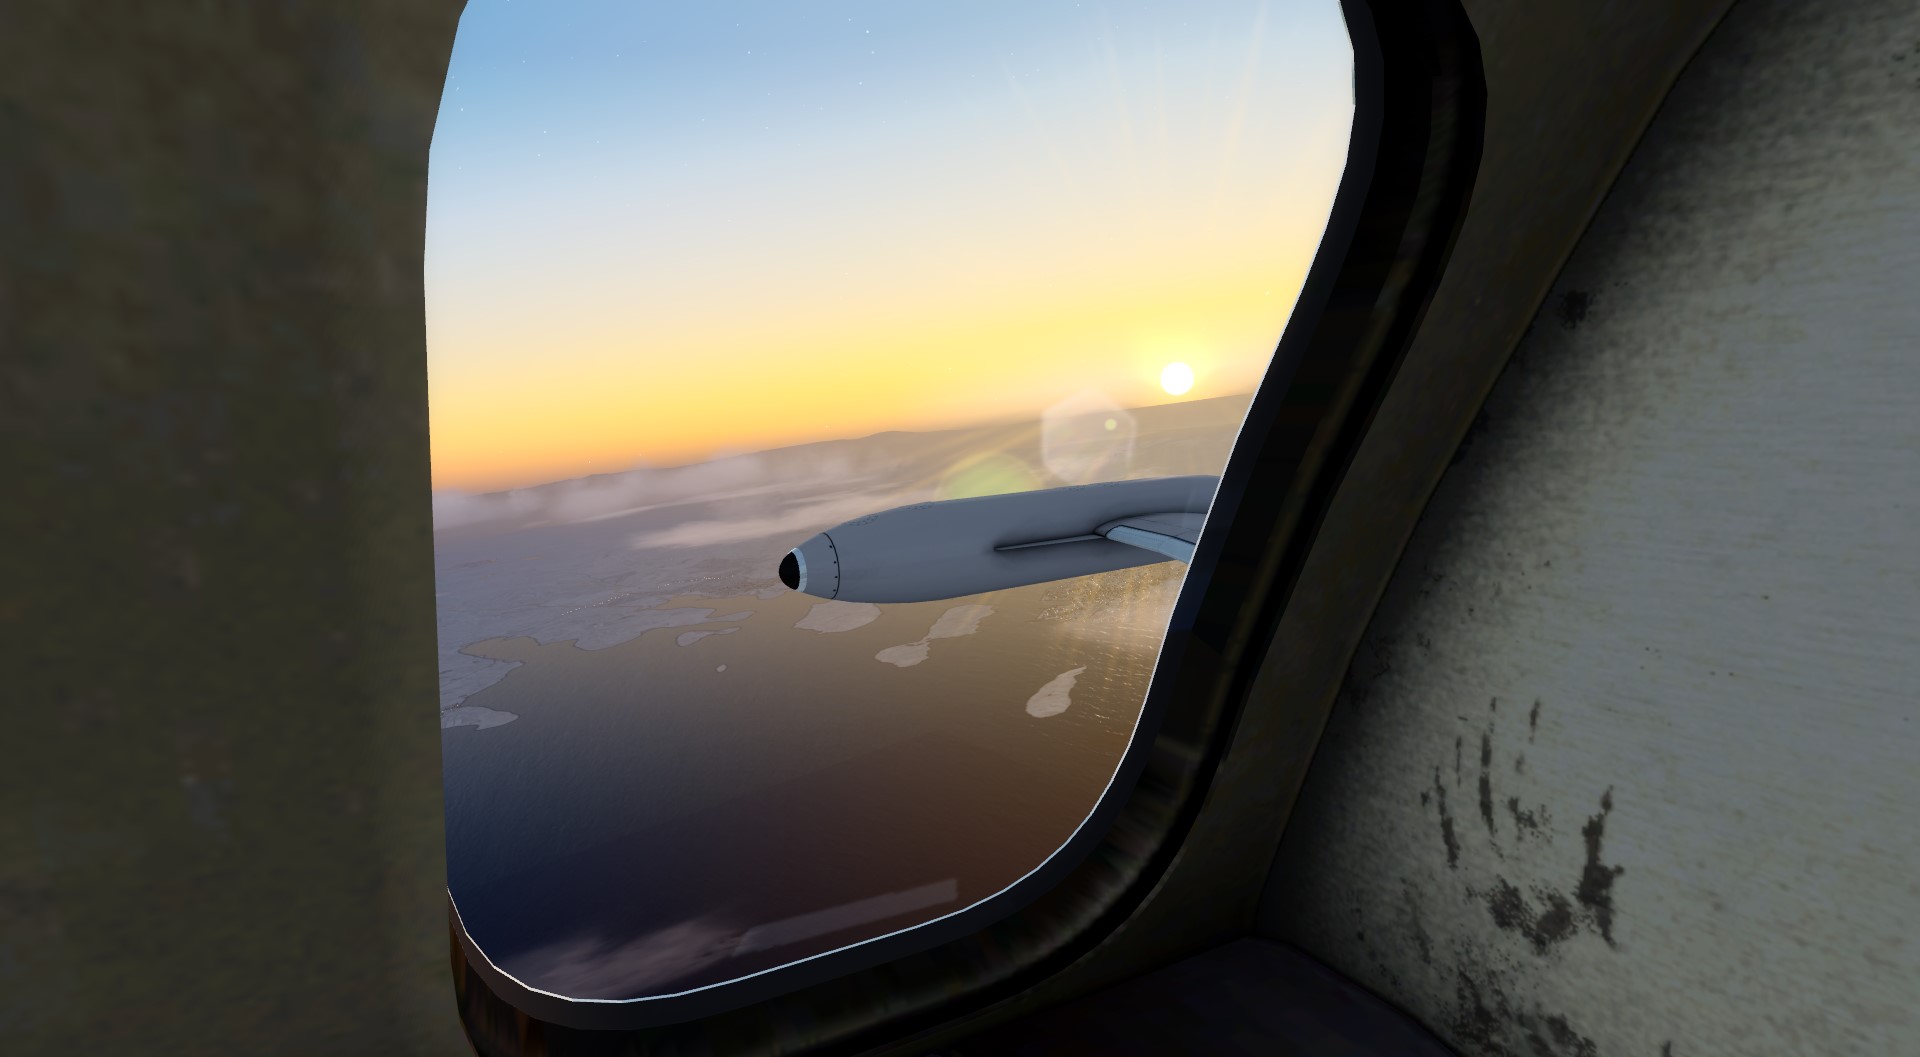 Flysimware – Learjet 35A 评测与冰岛送货之旅-2385 